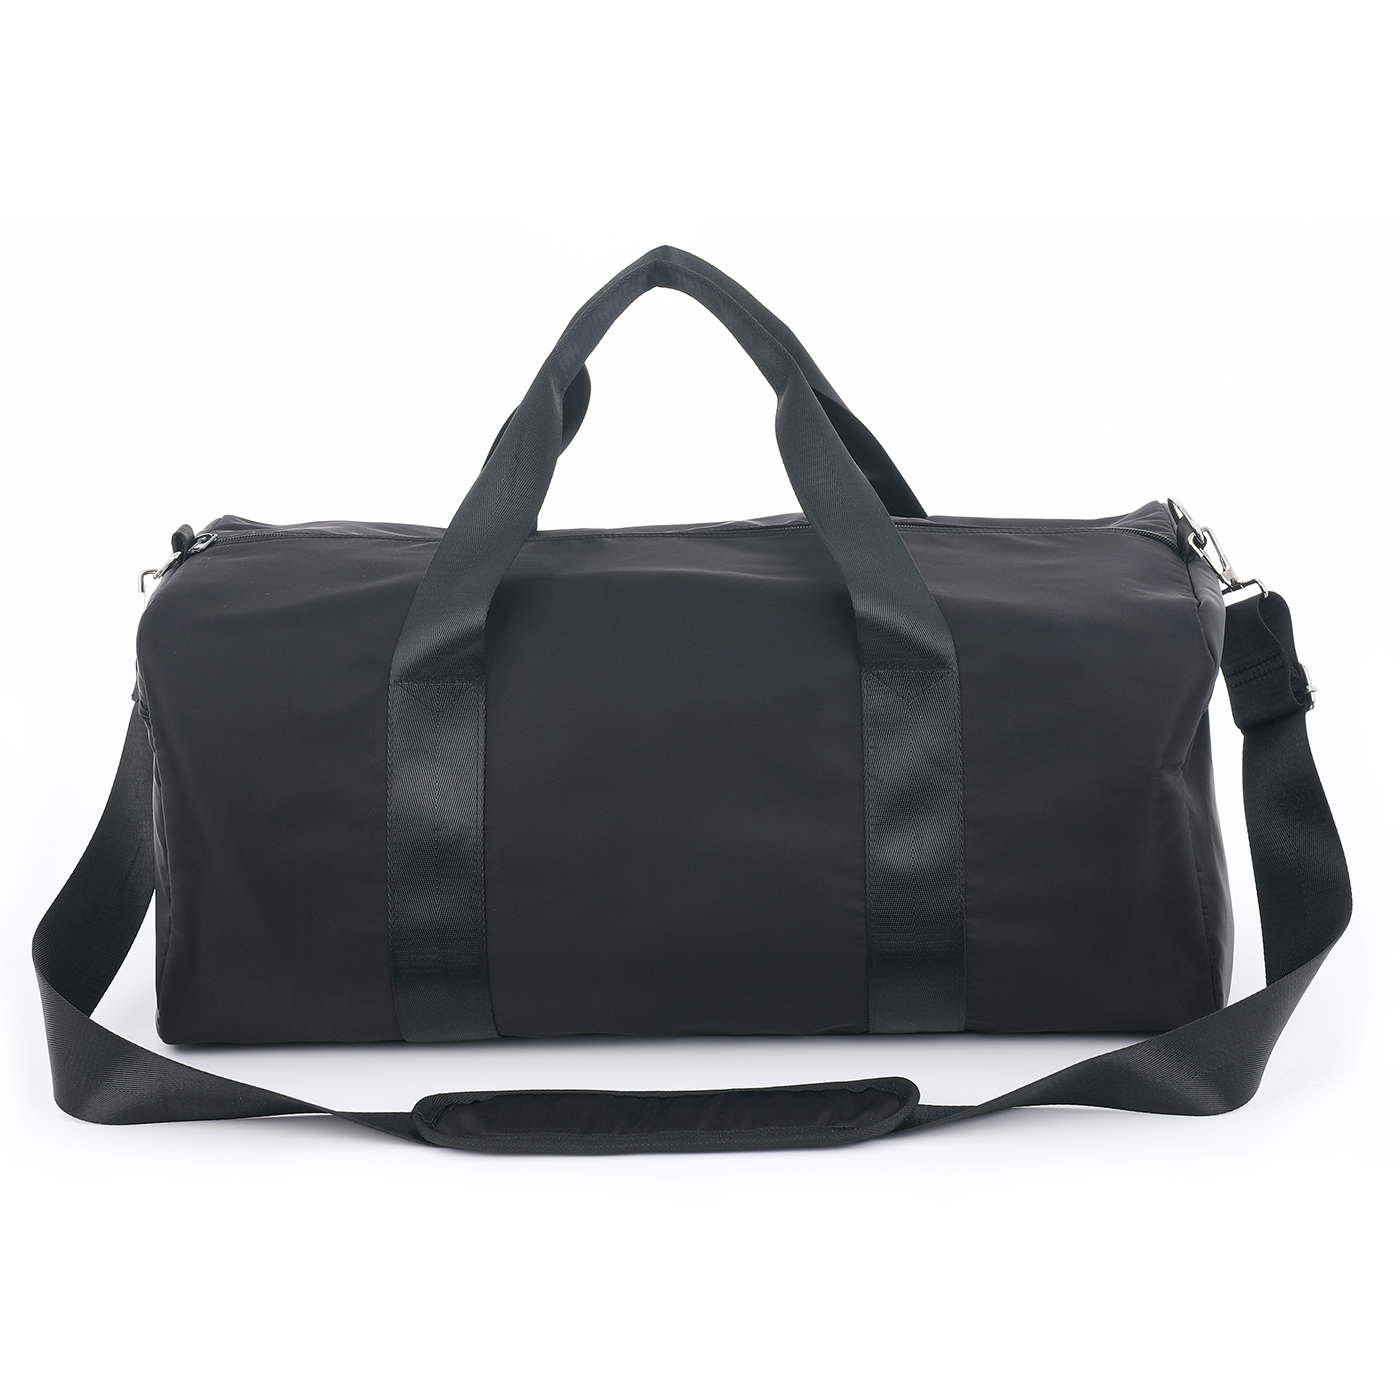 Travel Duffel Bag With Shoulder Strap2